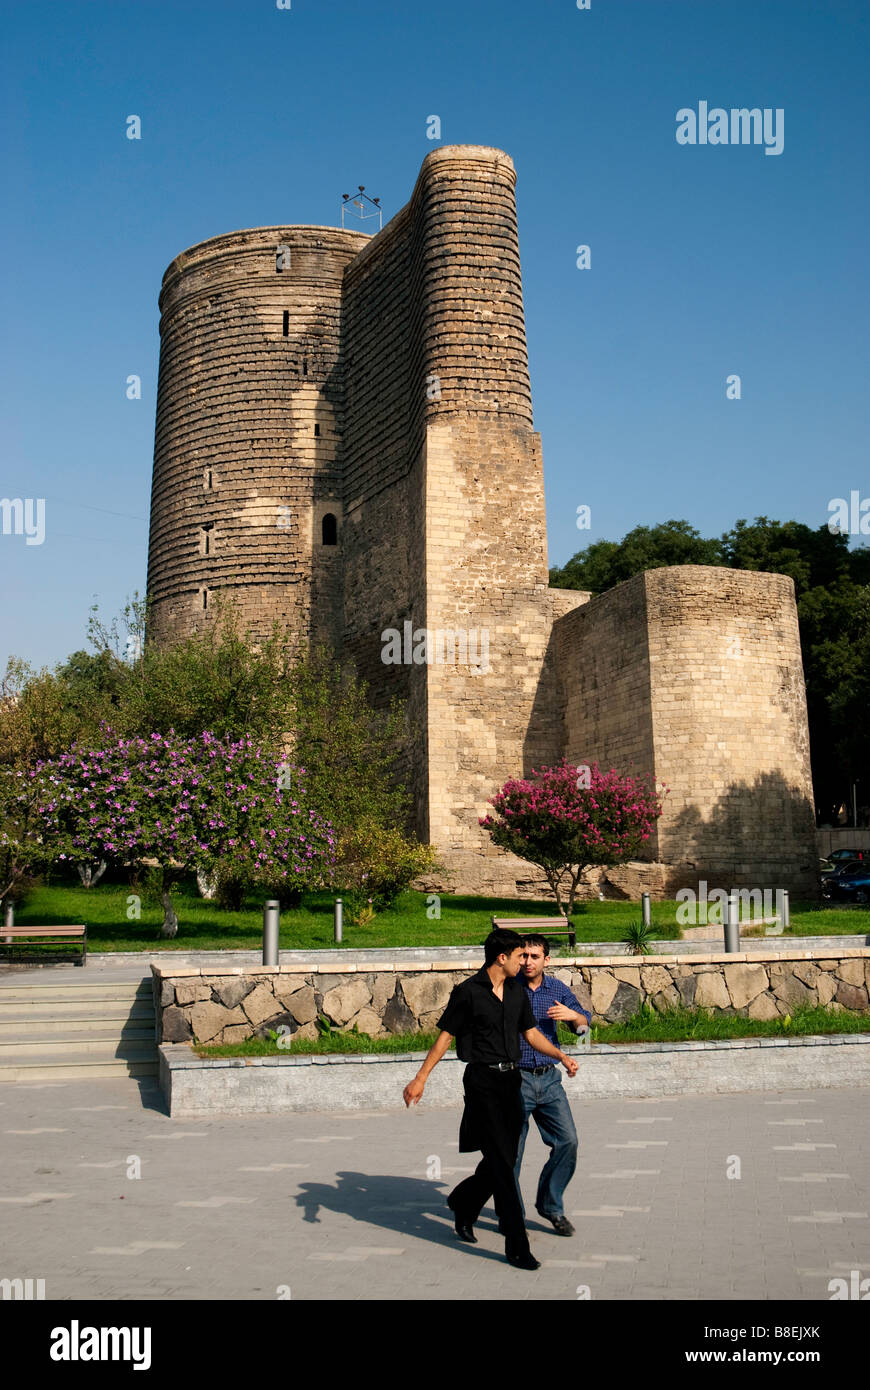 Jungfrauen Turm Baku Aserbaidschan Kaukasus Reisen Asien Europa Stockfoto